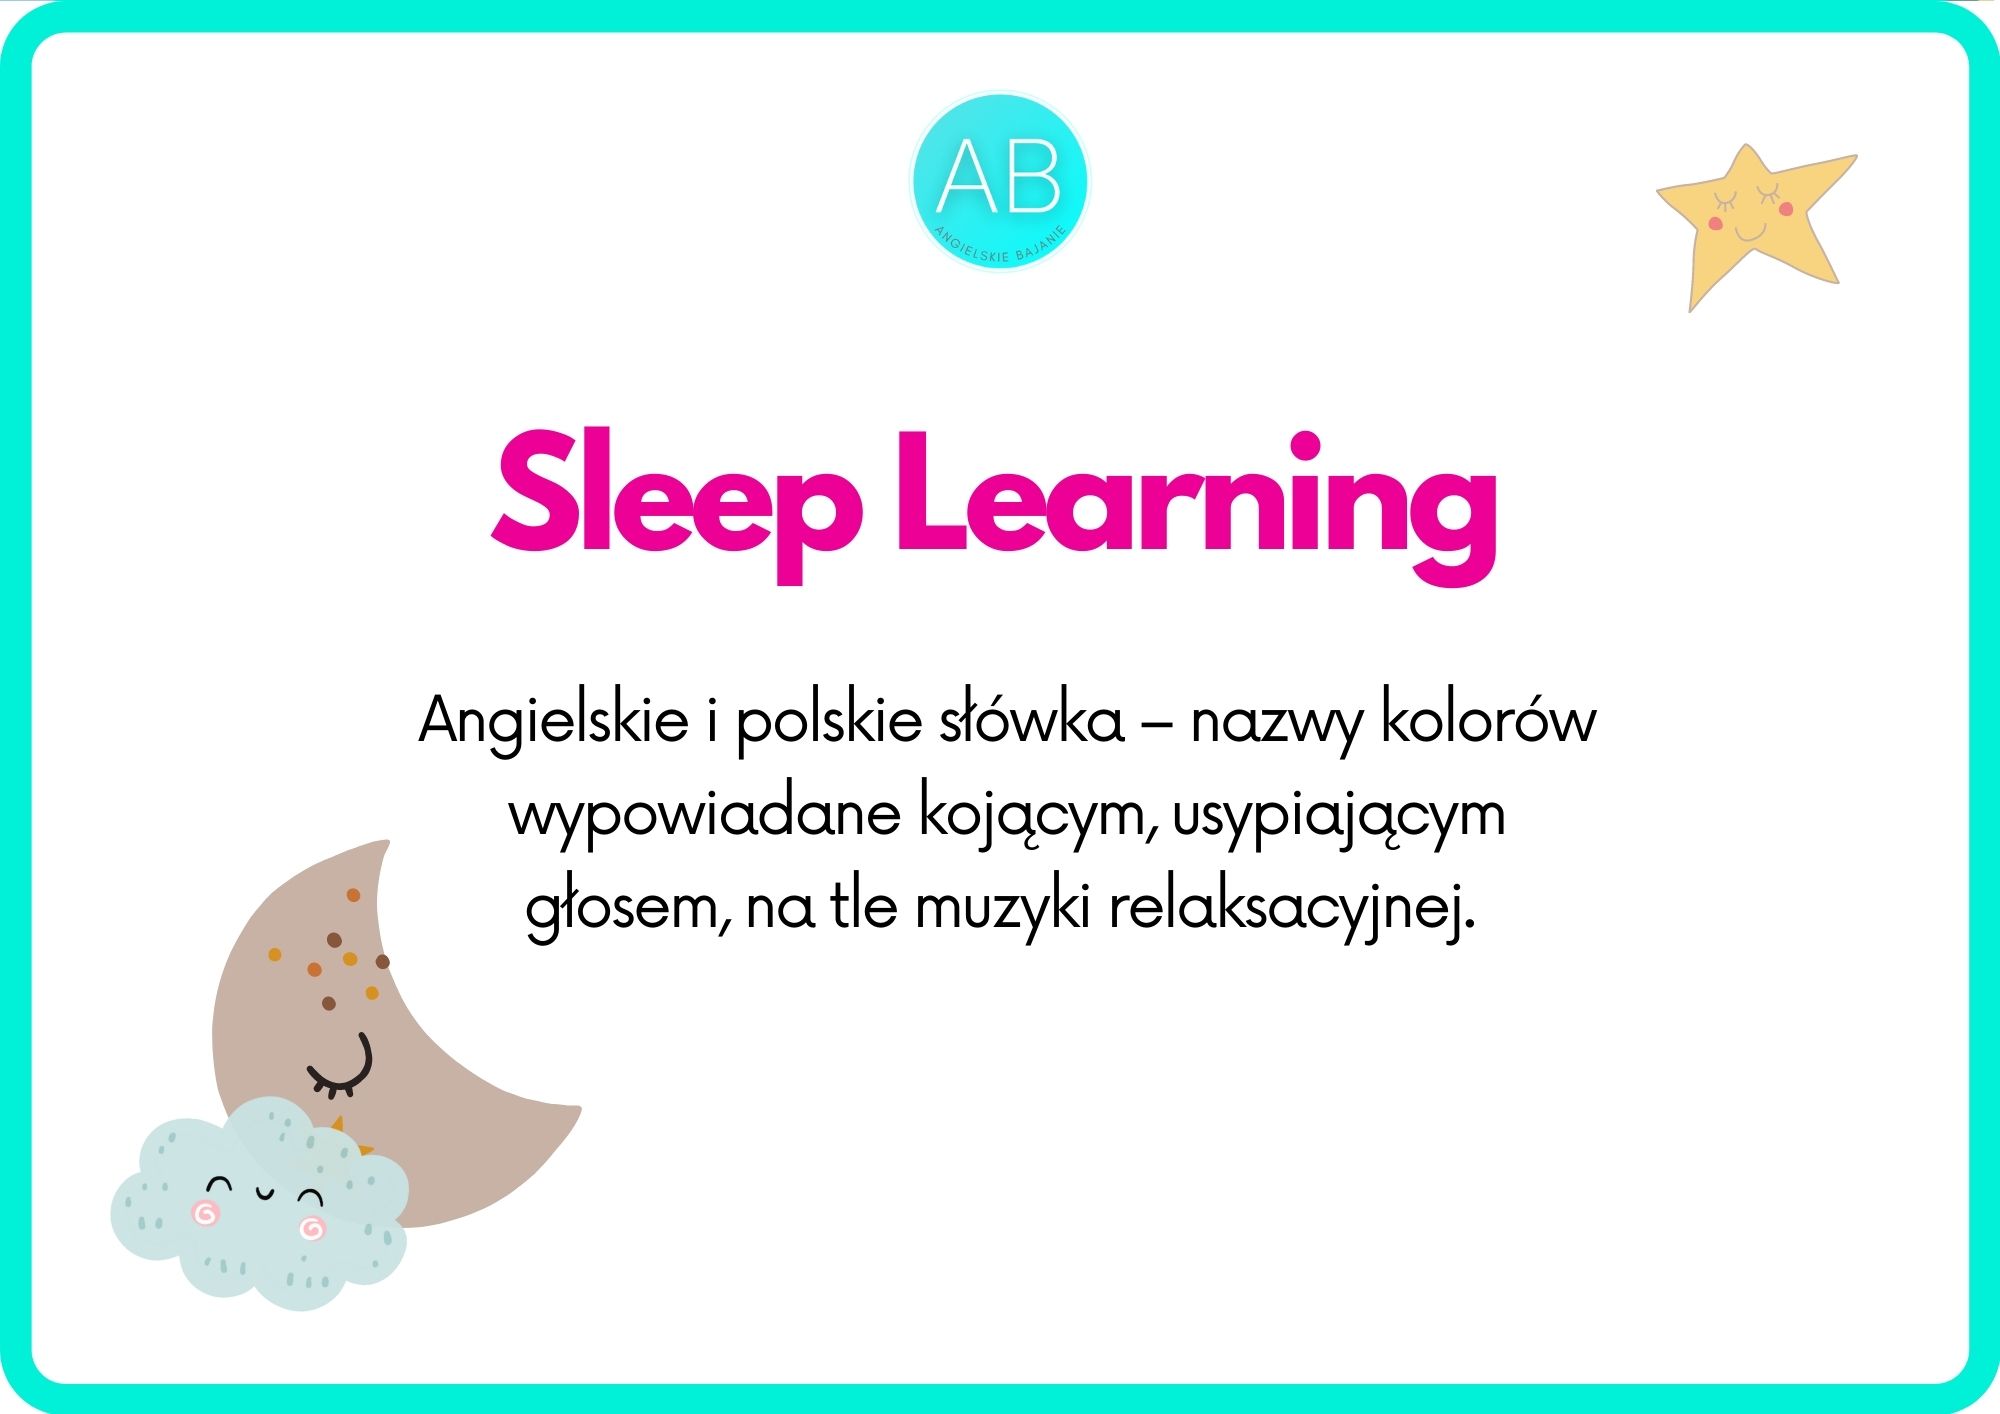 Sleep learning - colours